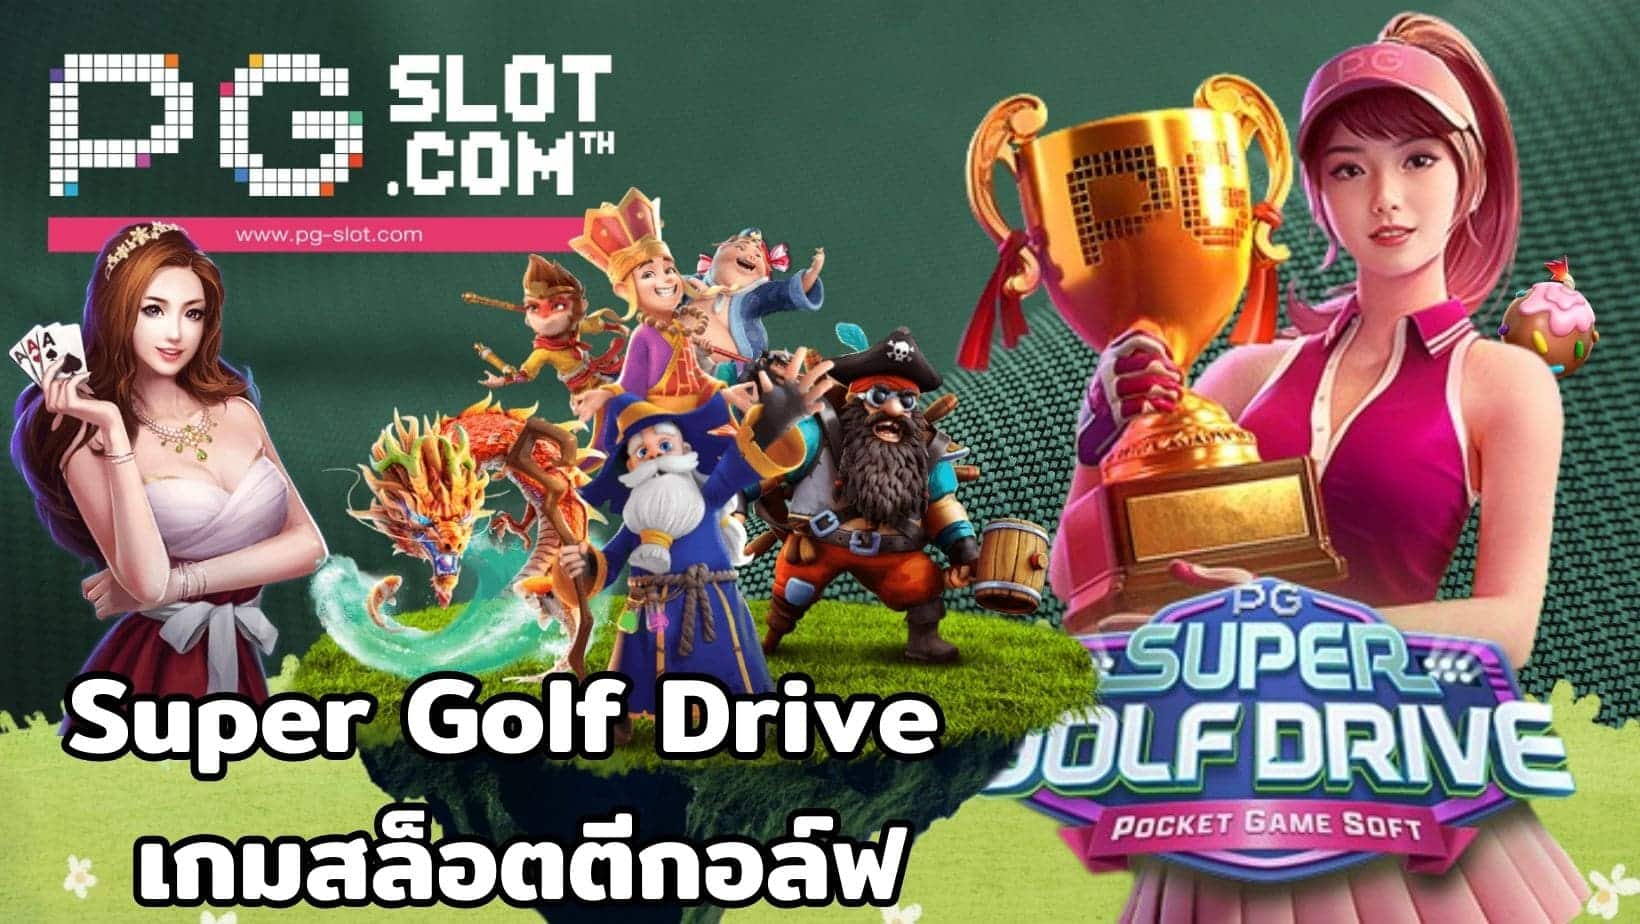 Super Golf Drive เกมสล็อตตีกอล์ฟ